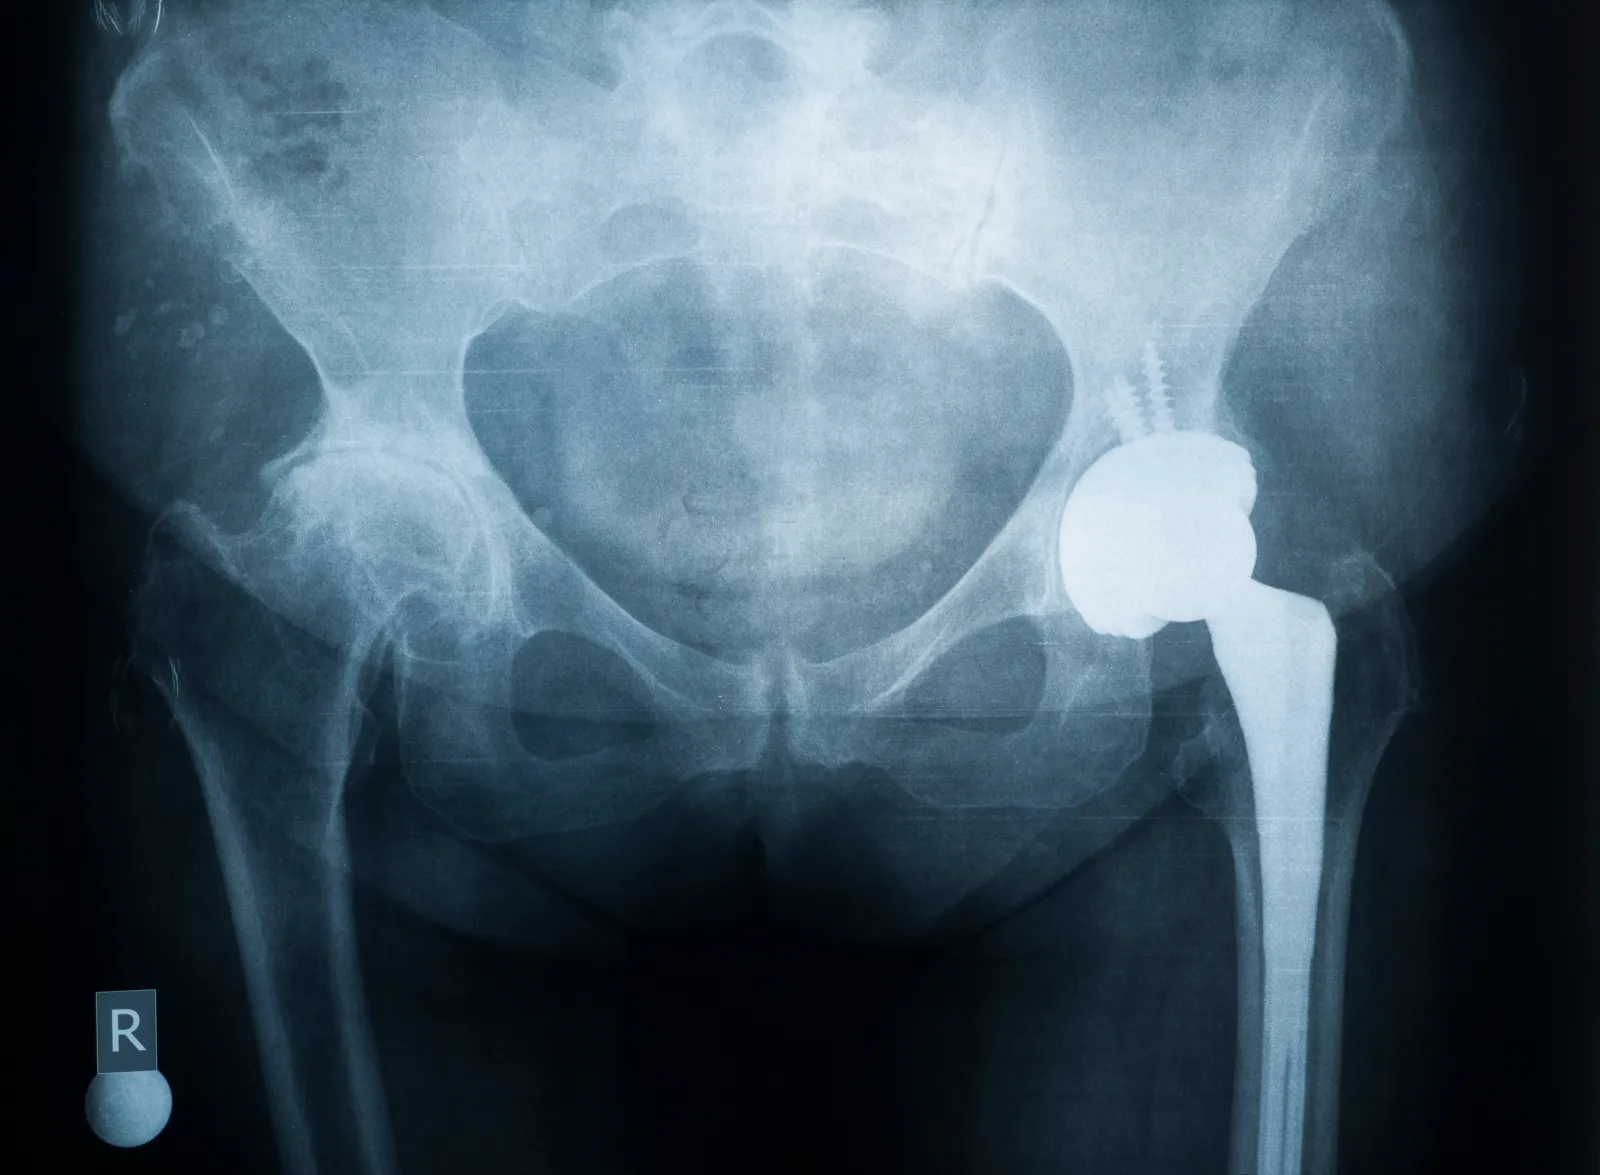 hip x-ray